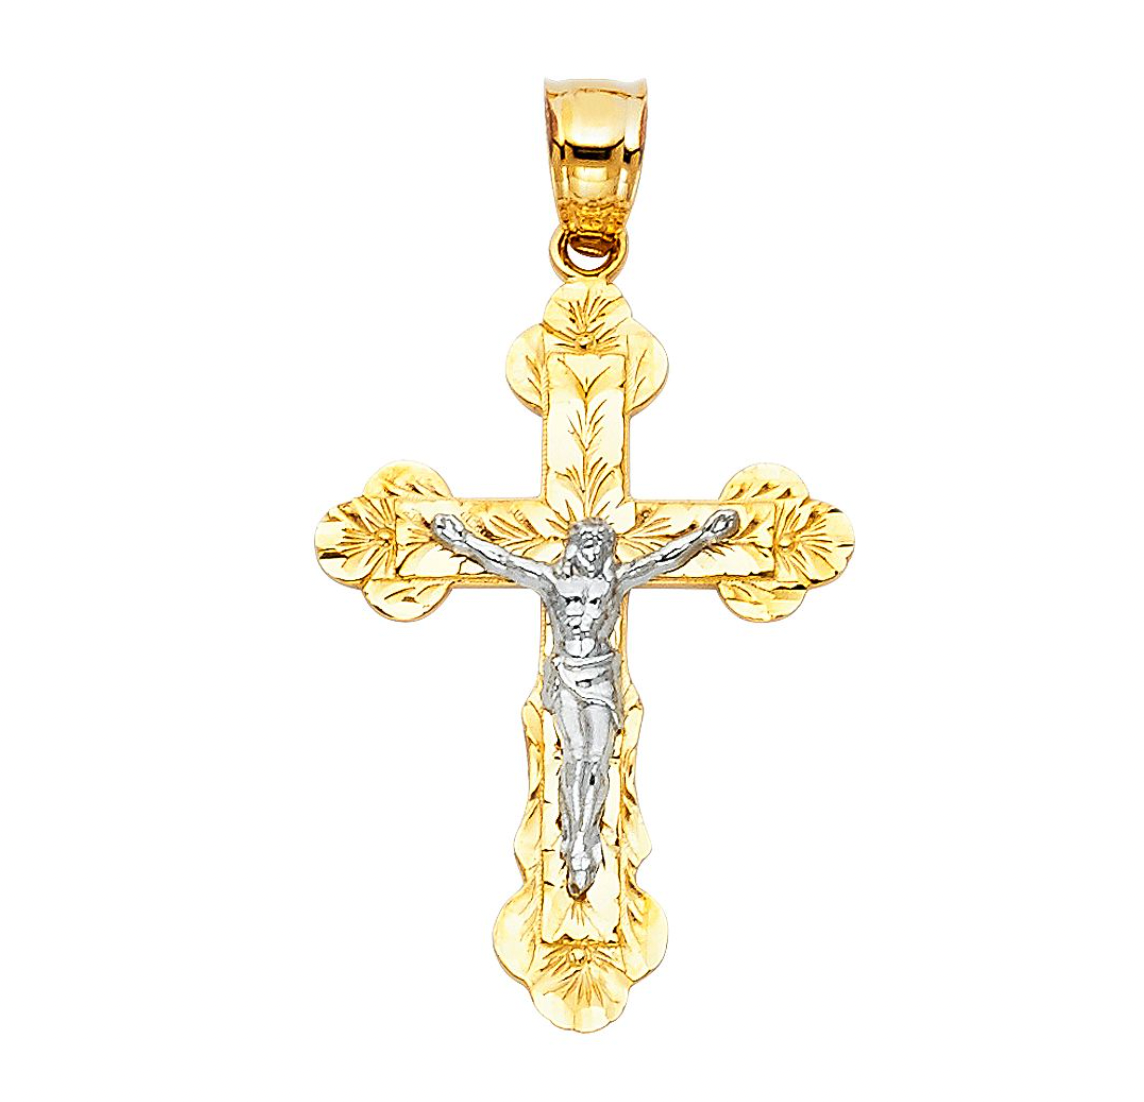 Gold Crucifix Cross Pendant Model-0863 - Charlie & Co. Jewelry